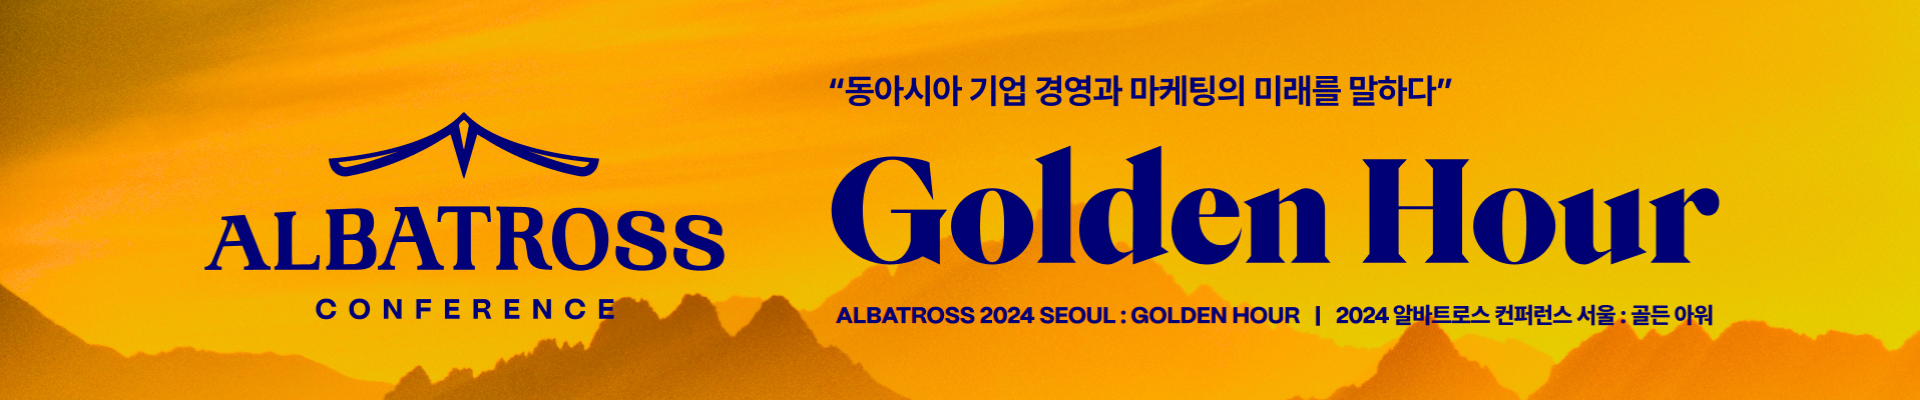 Albatross Conference 2024 Seoul